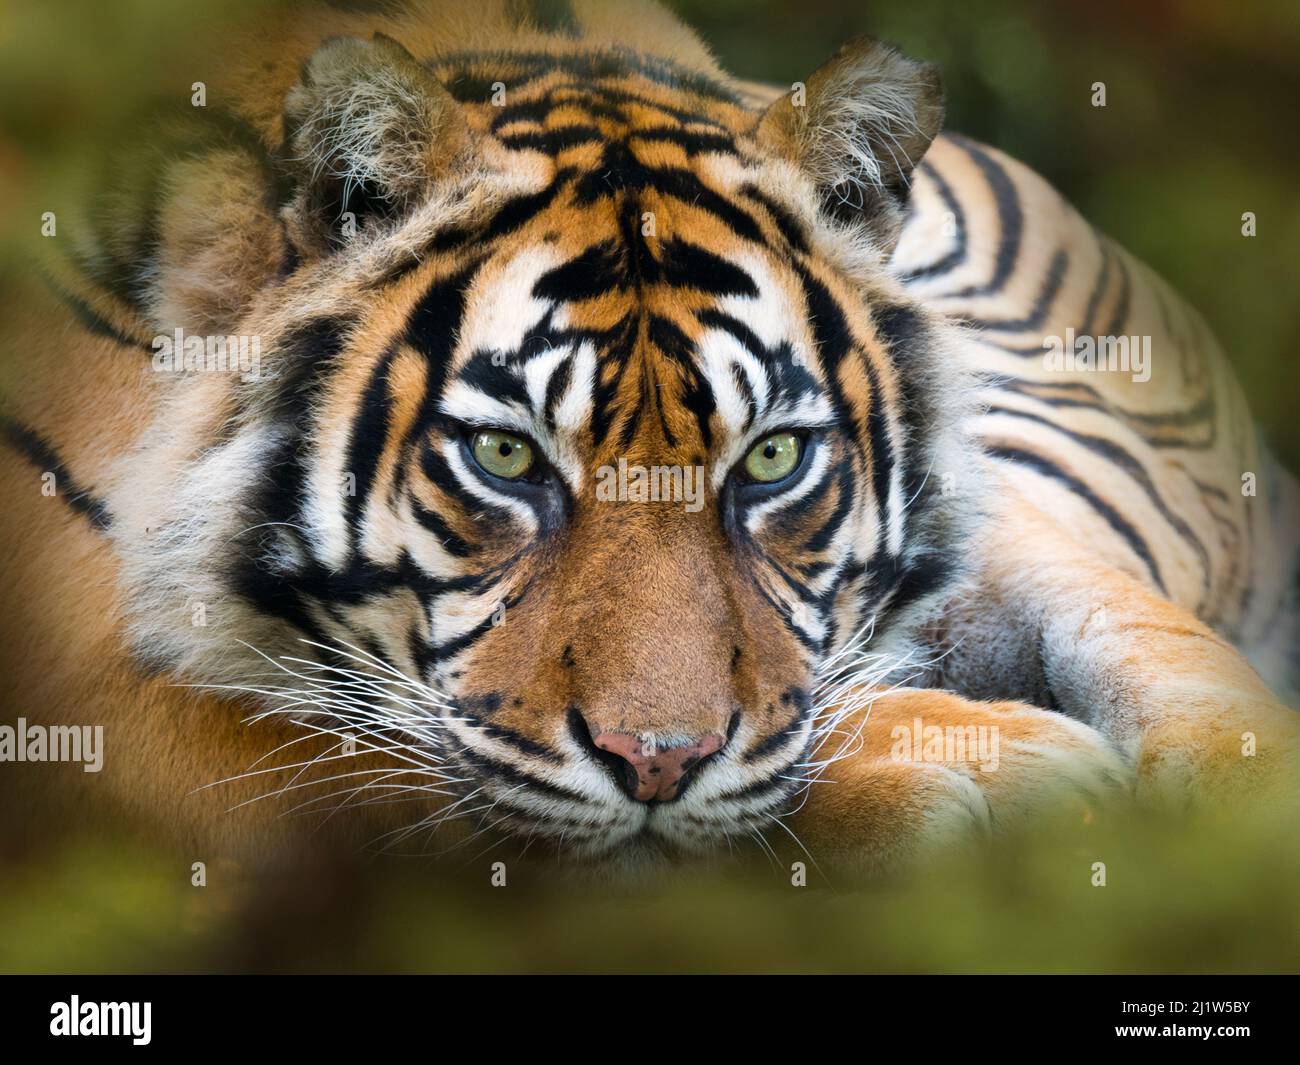 Sumatran tiger (Panthera tigris sondaica). Captive, with digitally added leaf pattern. Stock Photo